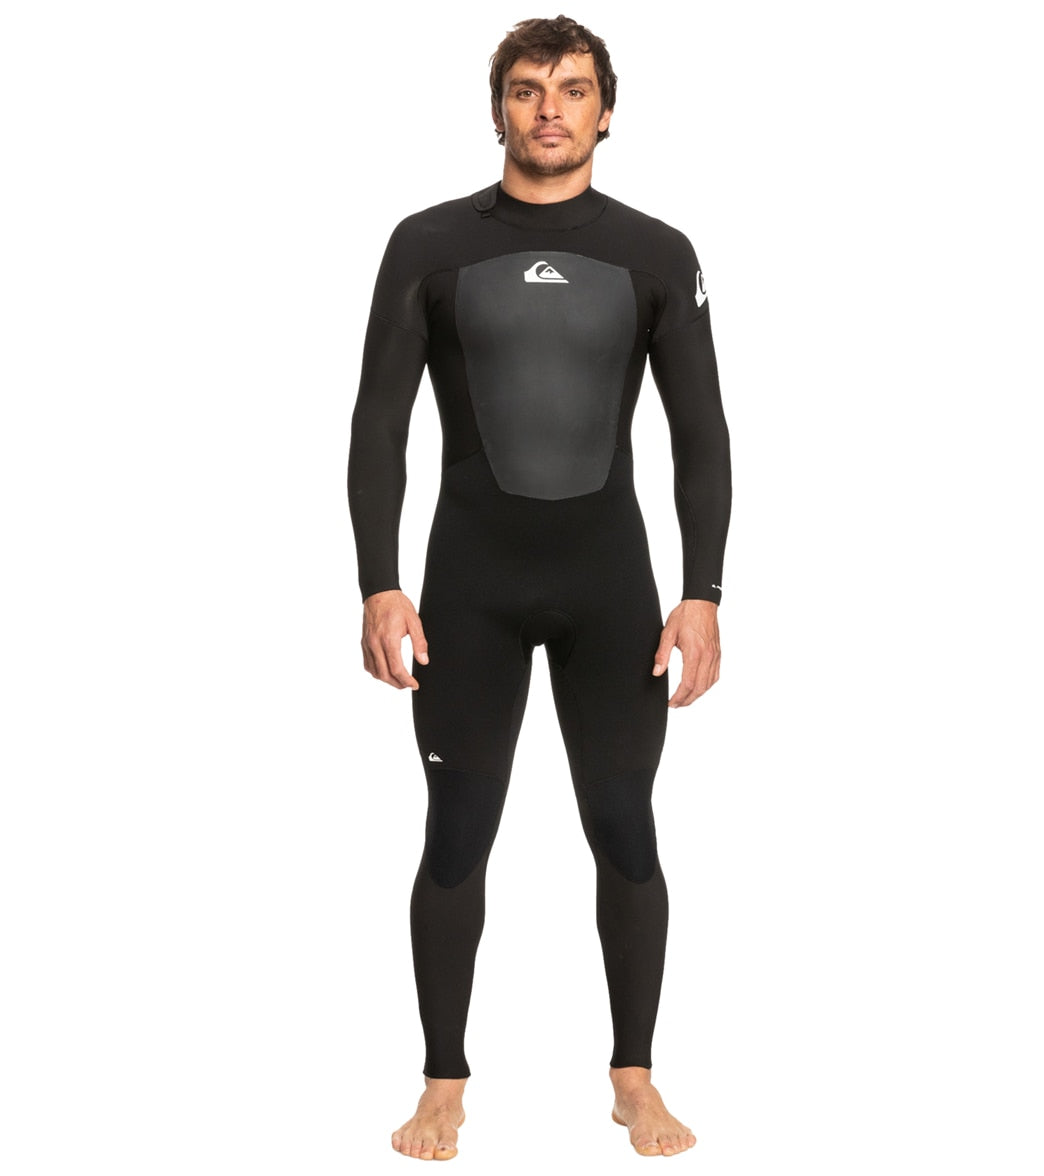 Quiksilver Men's 3/2mm Prologue GBS Back Zip Long Sleeve Fullsuit Wetsuit  at SwimOutlet.com